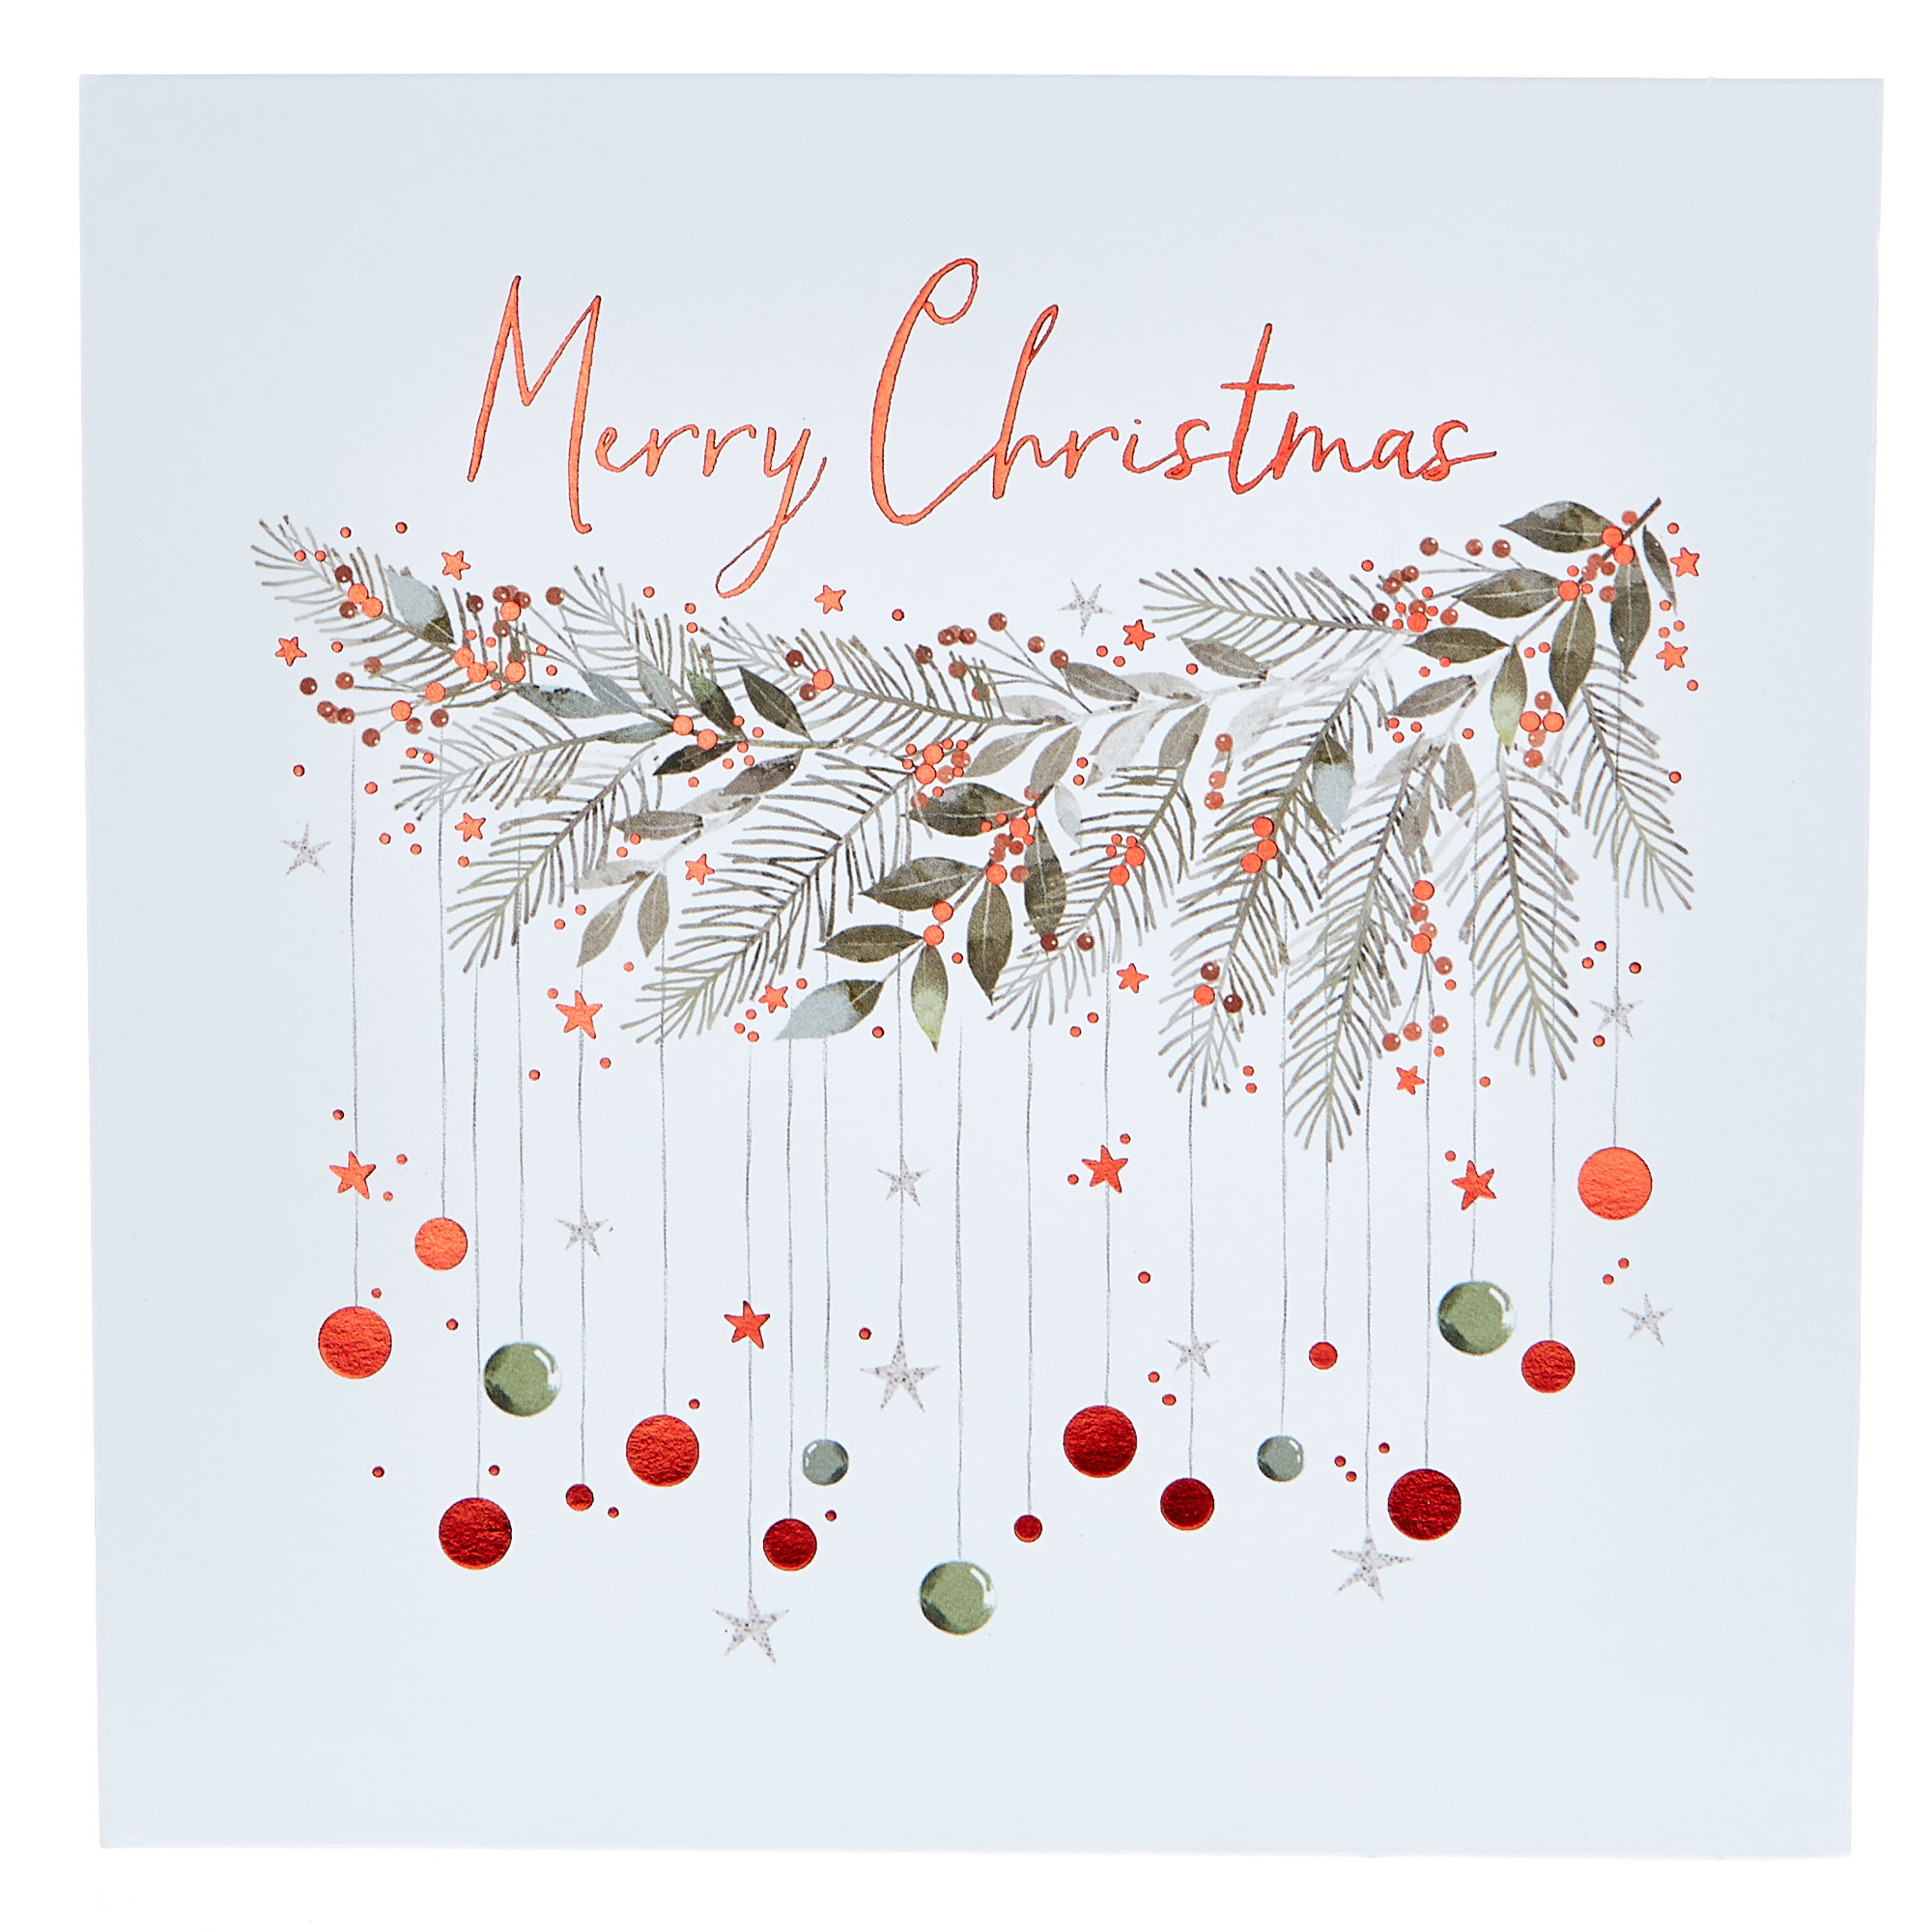 16 Festive Fern Charity Christmas Cards - 2 Designs 